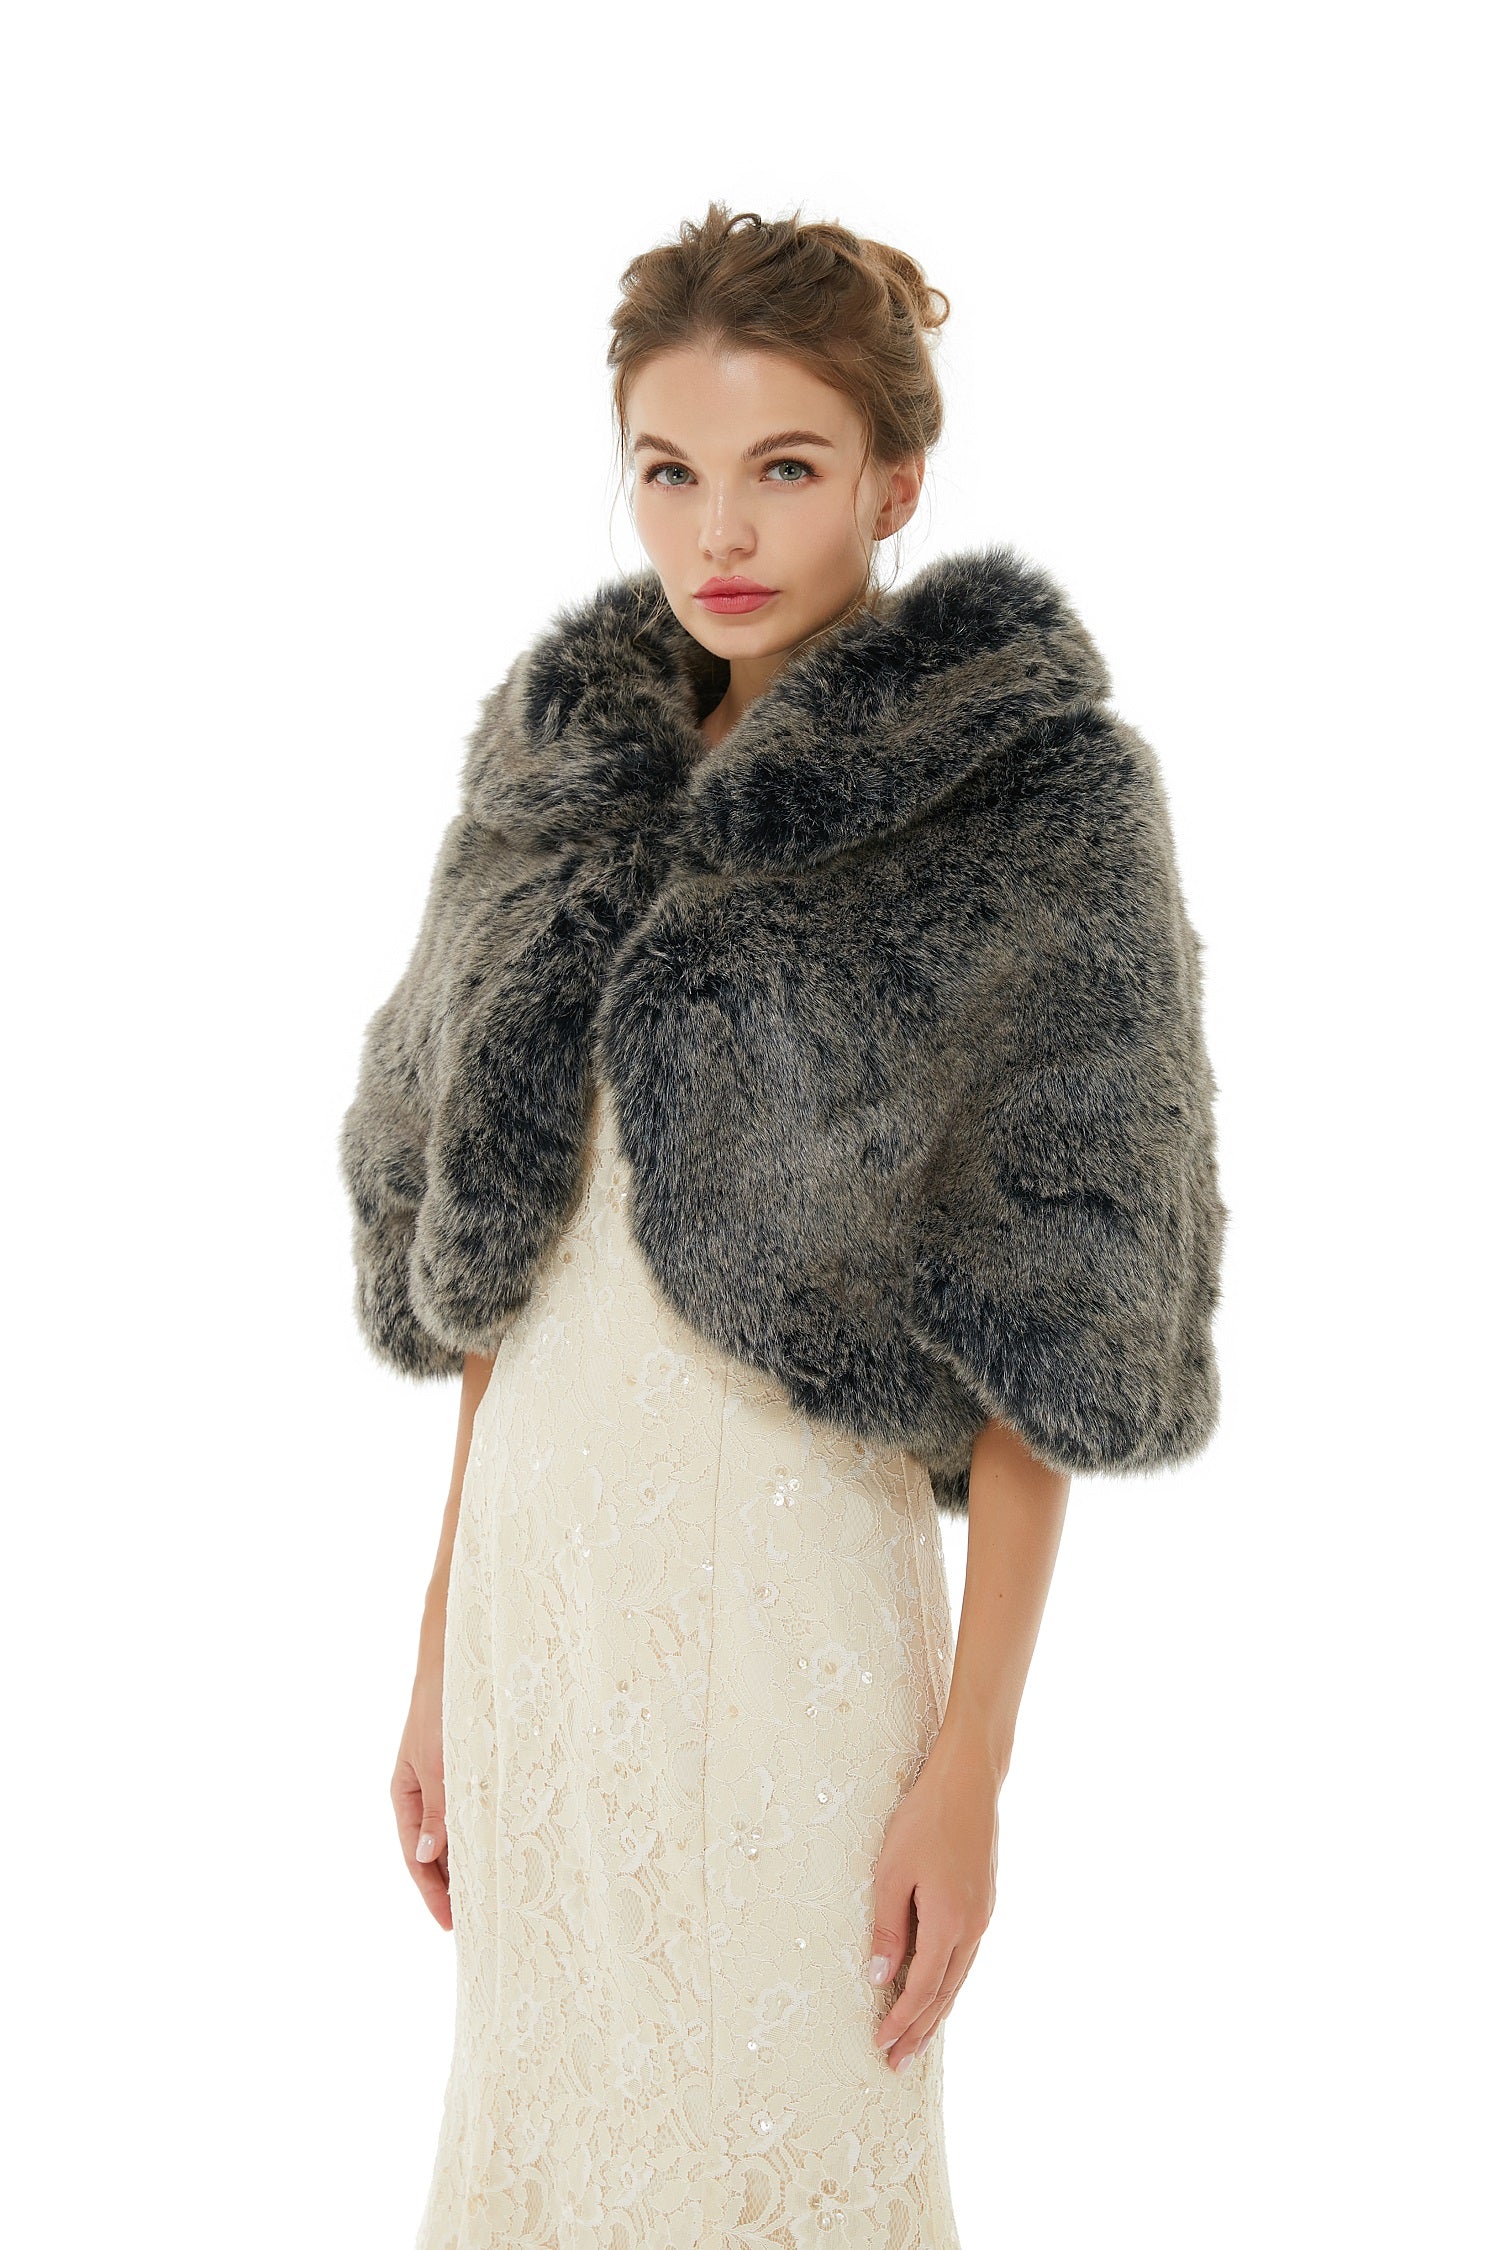 Dresseswow Dark Grey Faux Fur Wrap for Winter Weddings